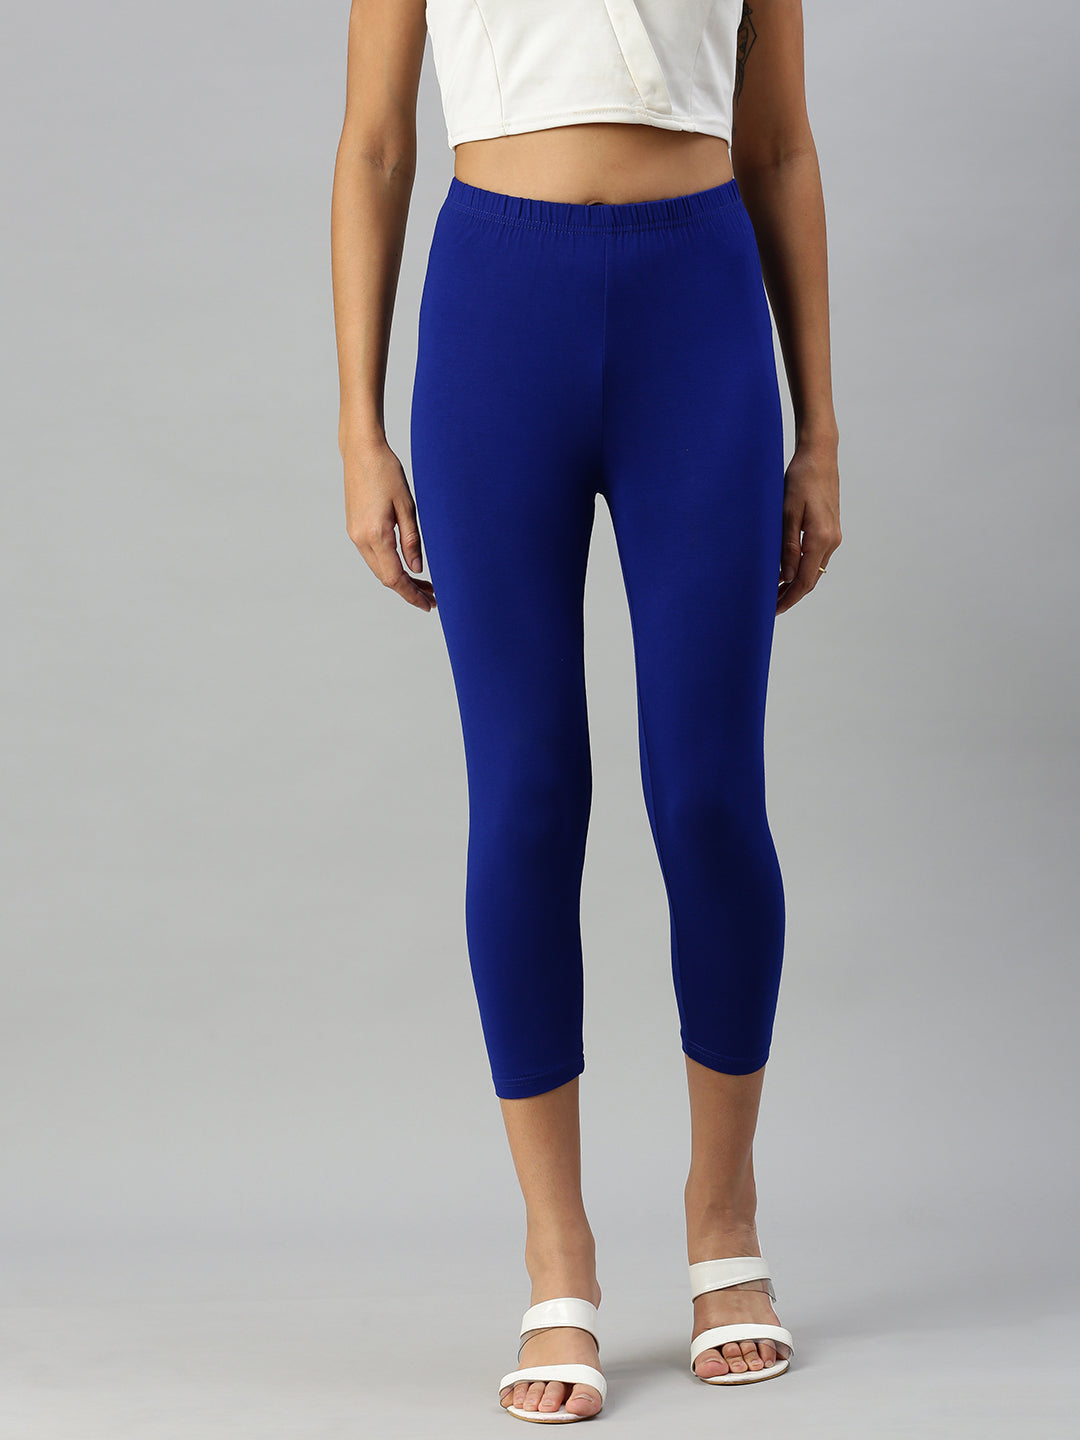 Shop Royal Blue Leggings Capri by Prisma - Stylish & Comfortable